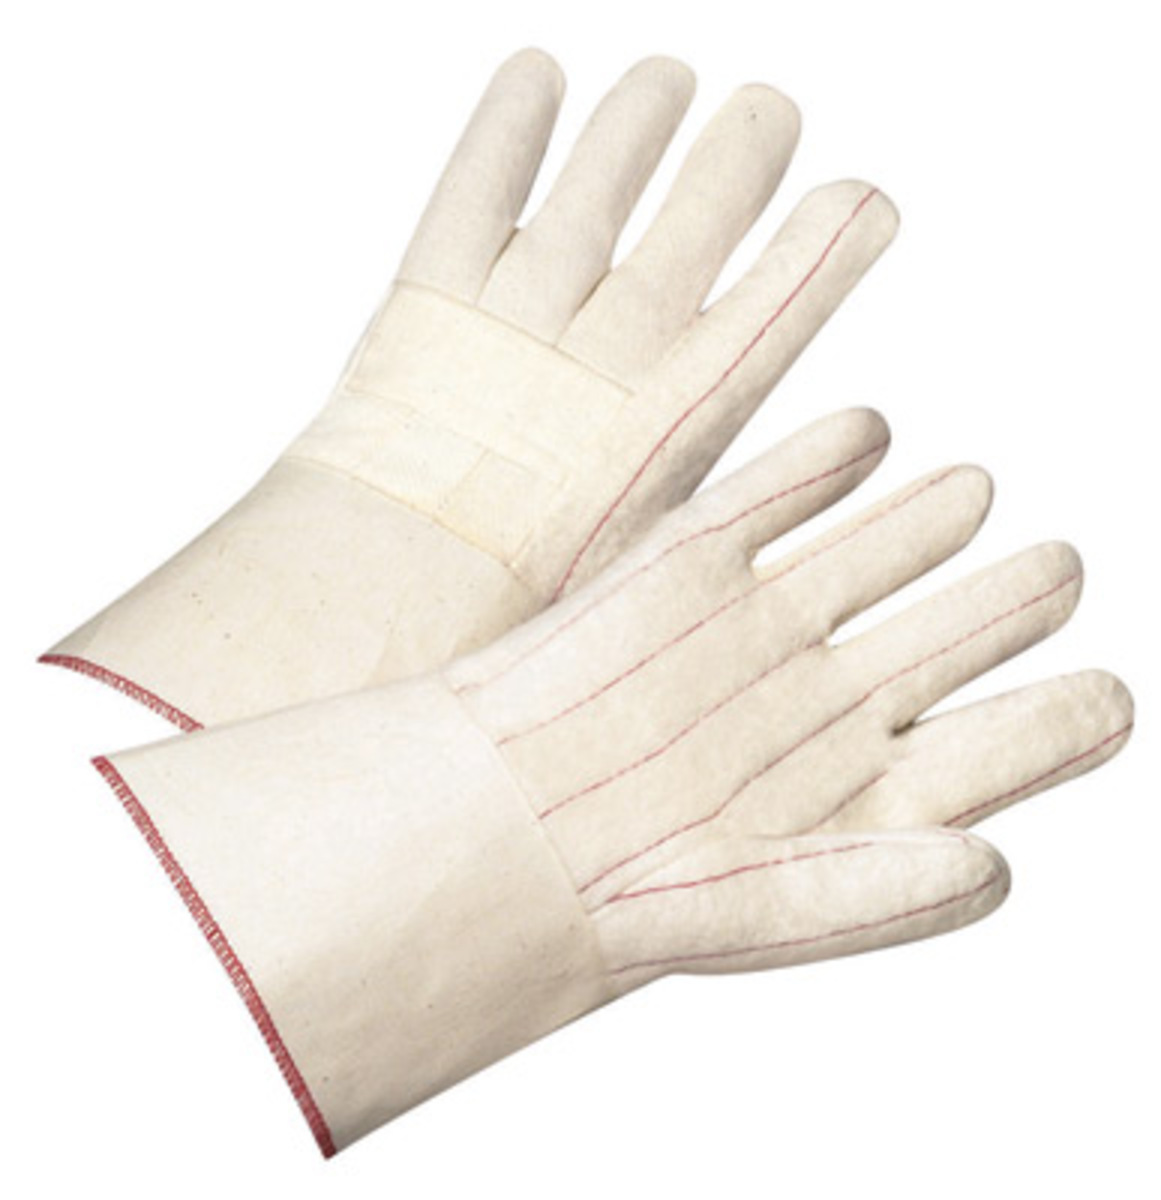 RADNOR® Natural Standard Weight Cotton Hot Mill Gloves With Gauntlet Cuff